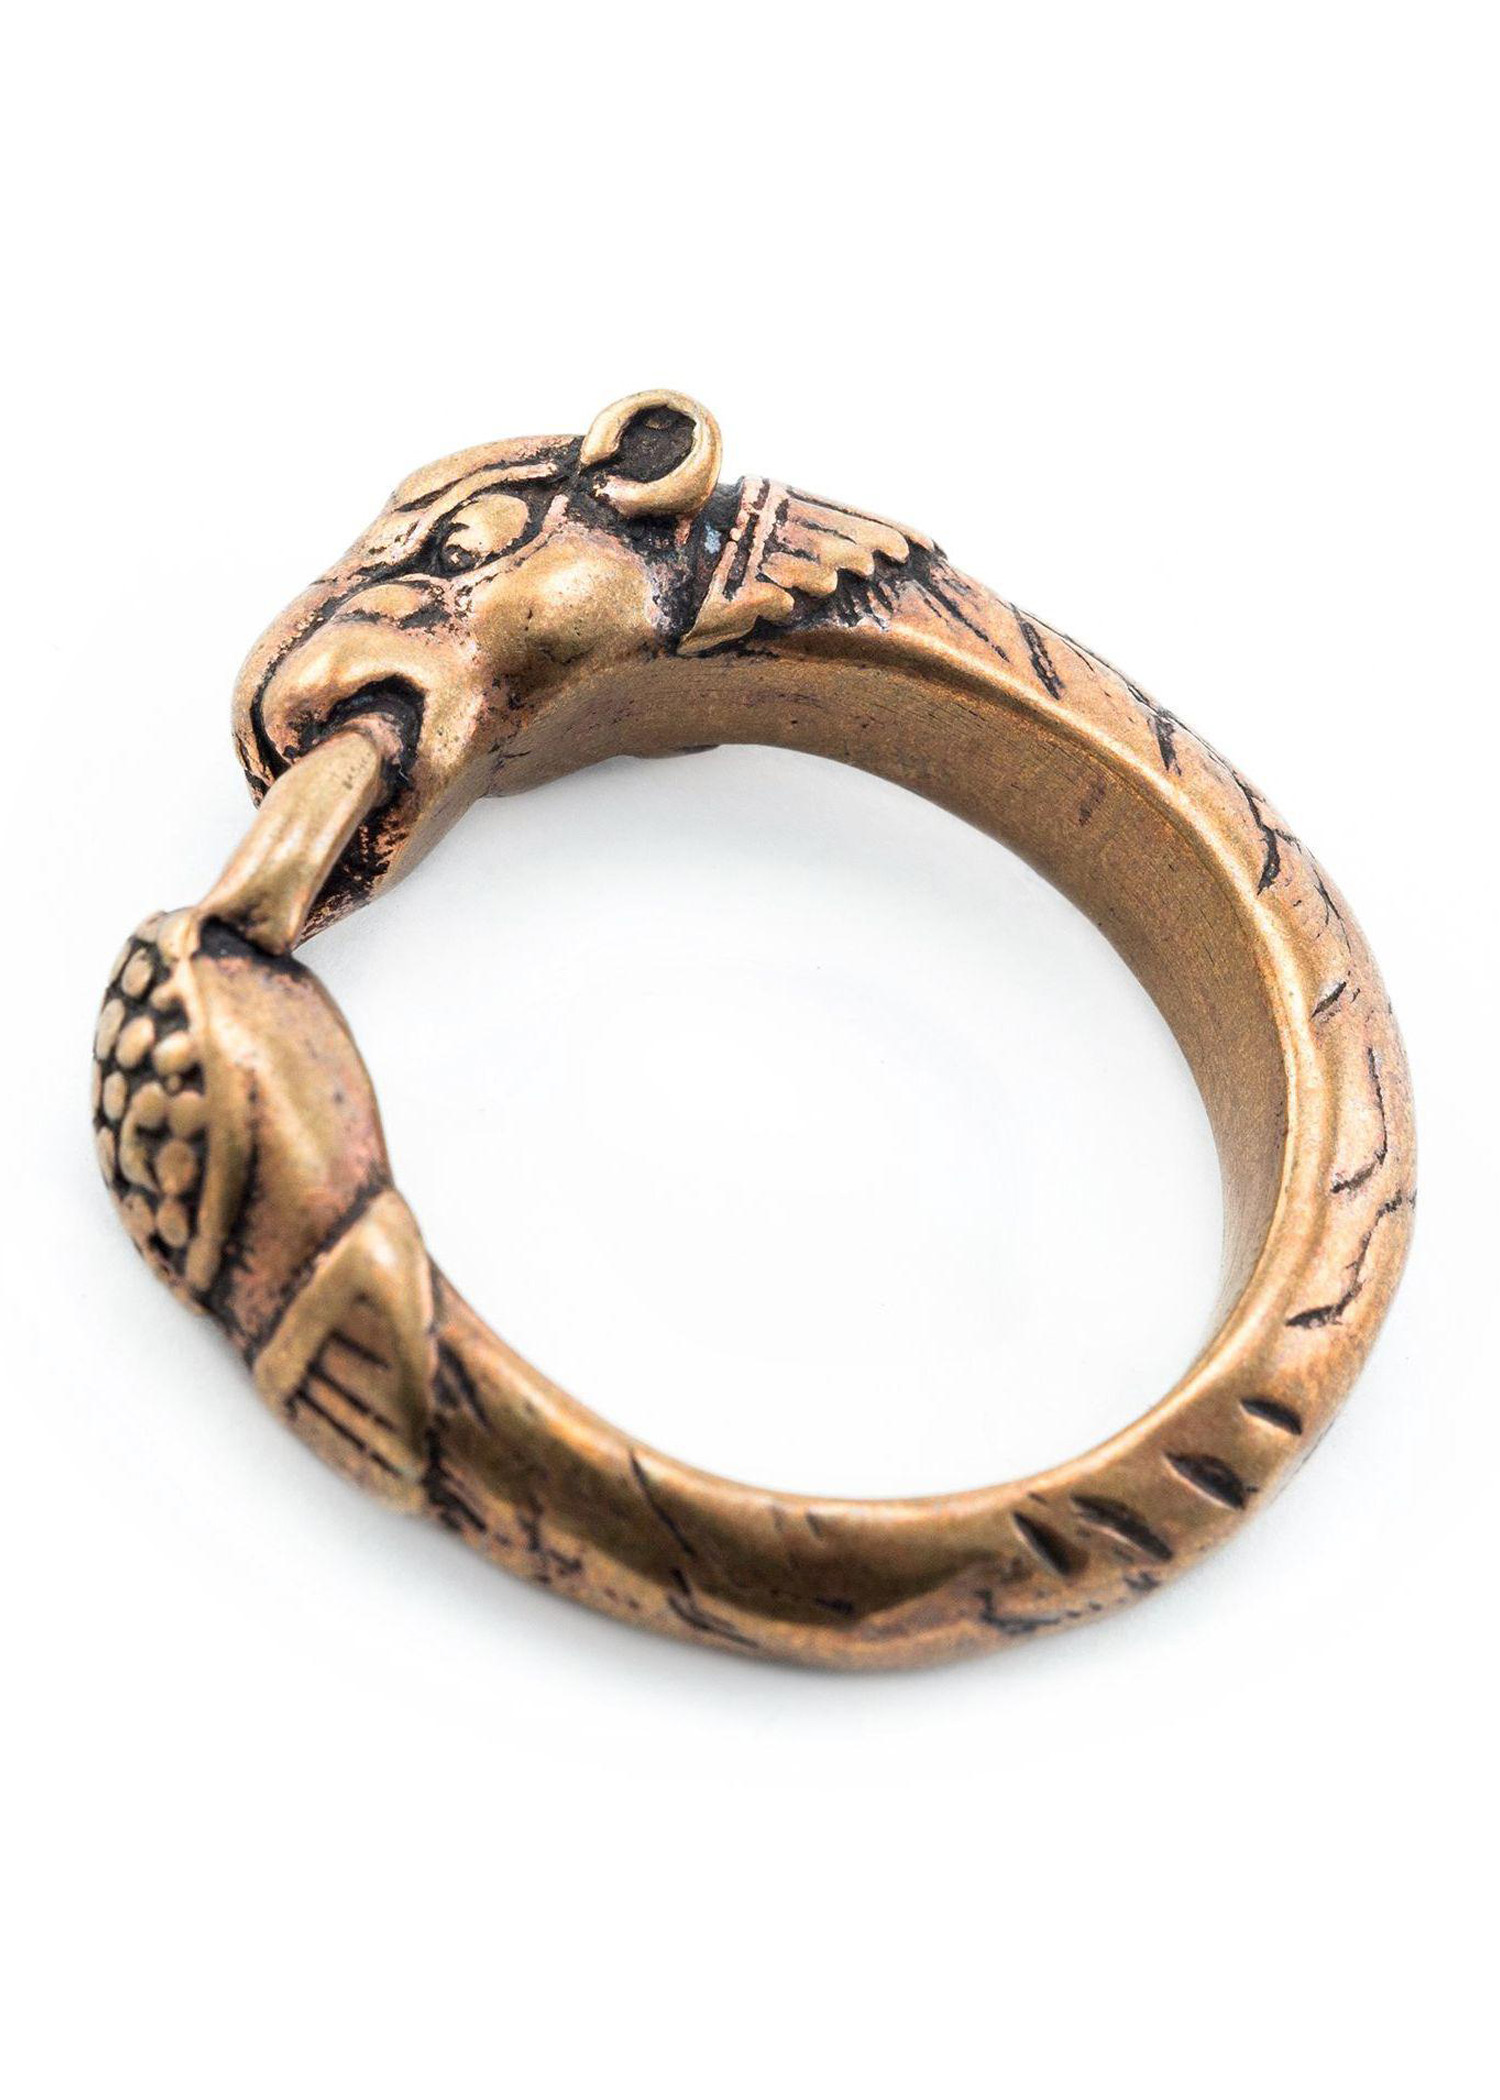 Wikinger Ring mit Hundekopf, Bronze, Ringgröße 20/62